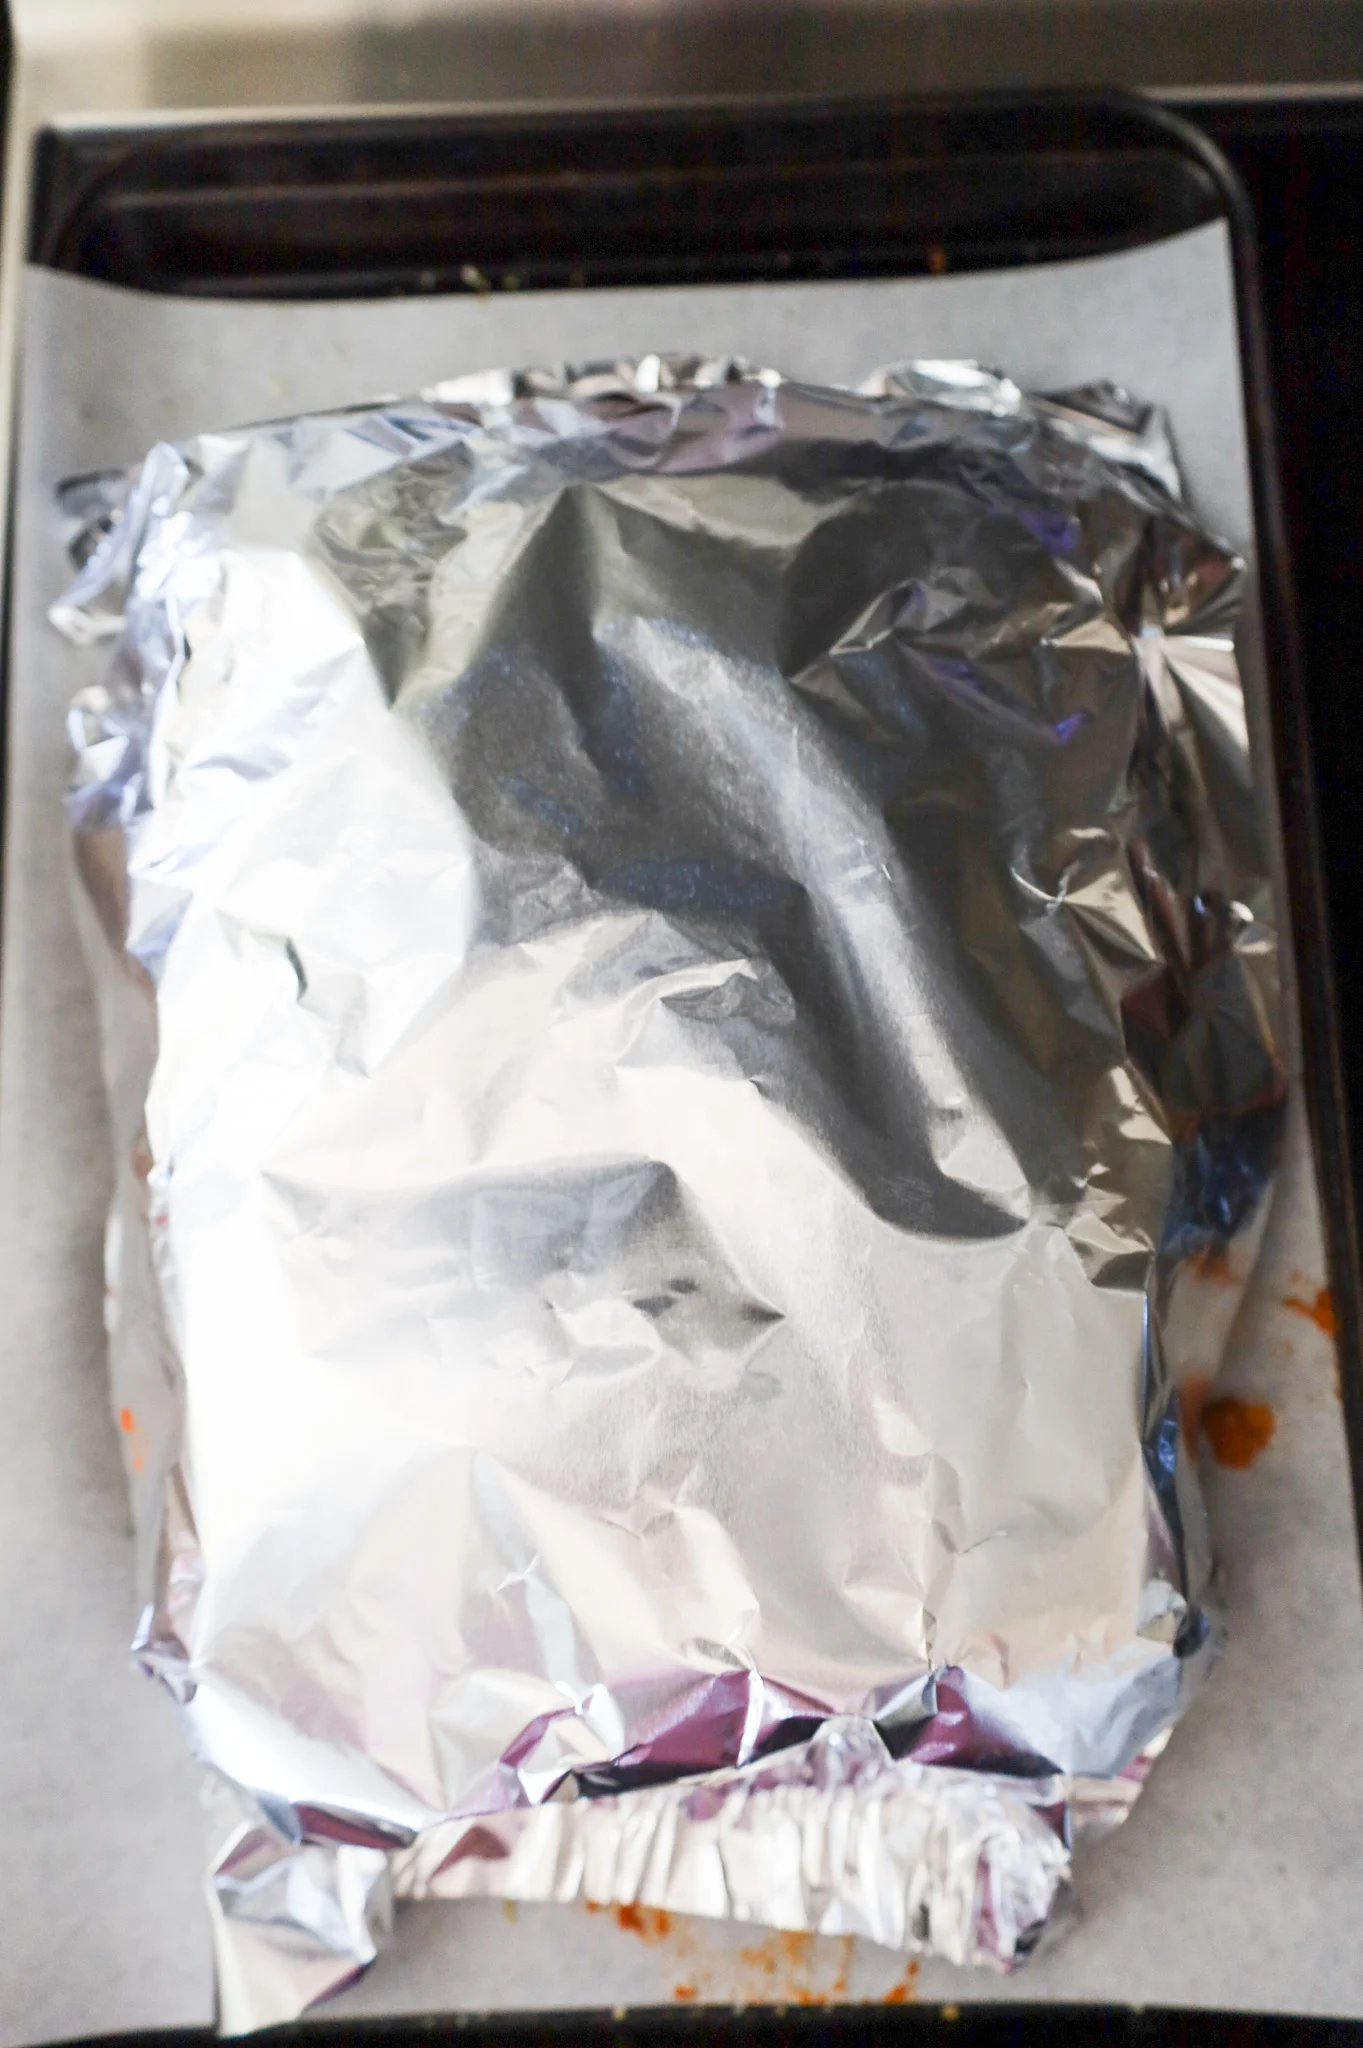 aluminum foil covering meatballs sliders on a baking sheet